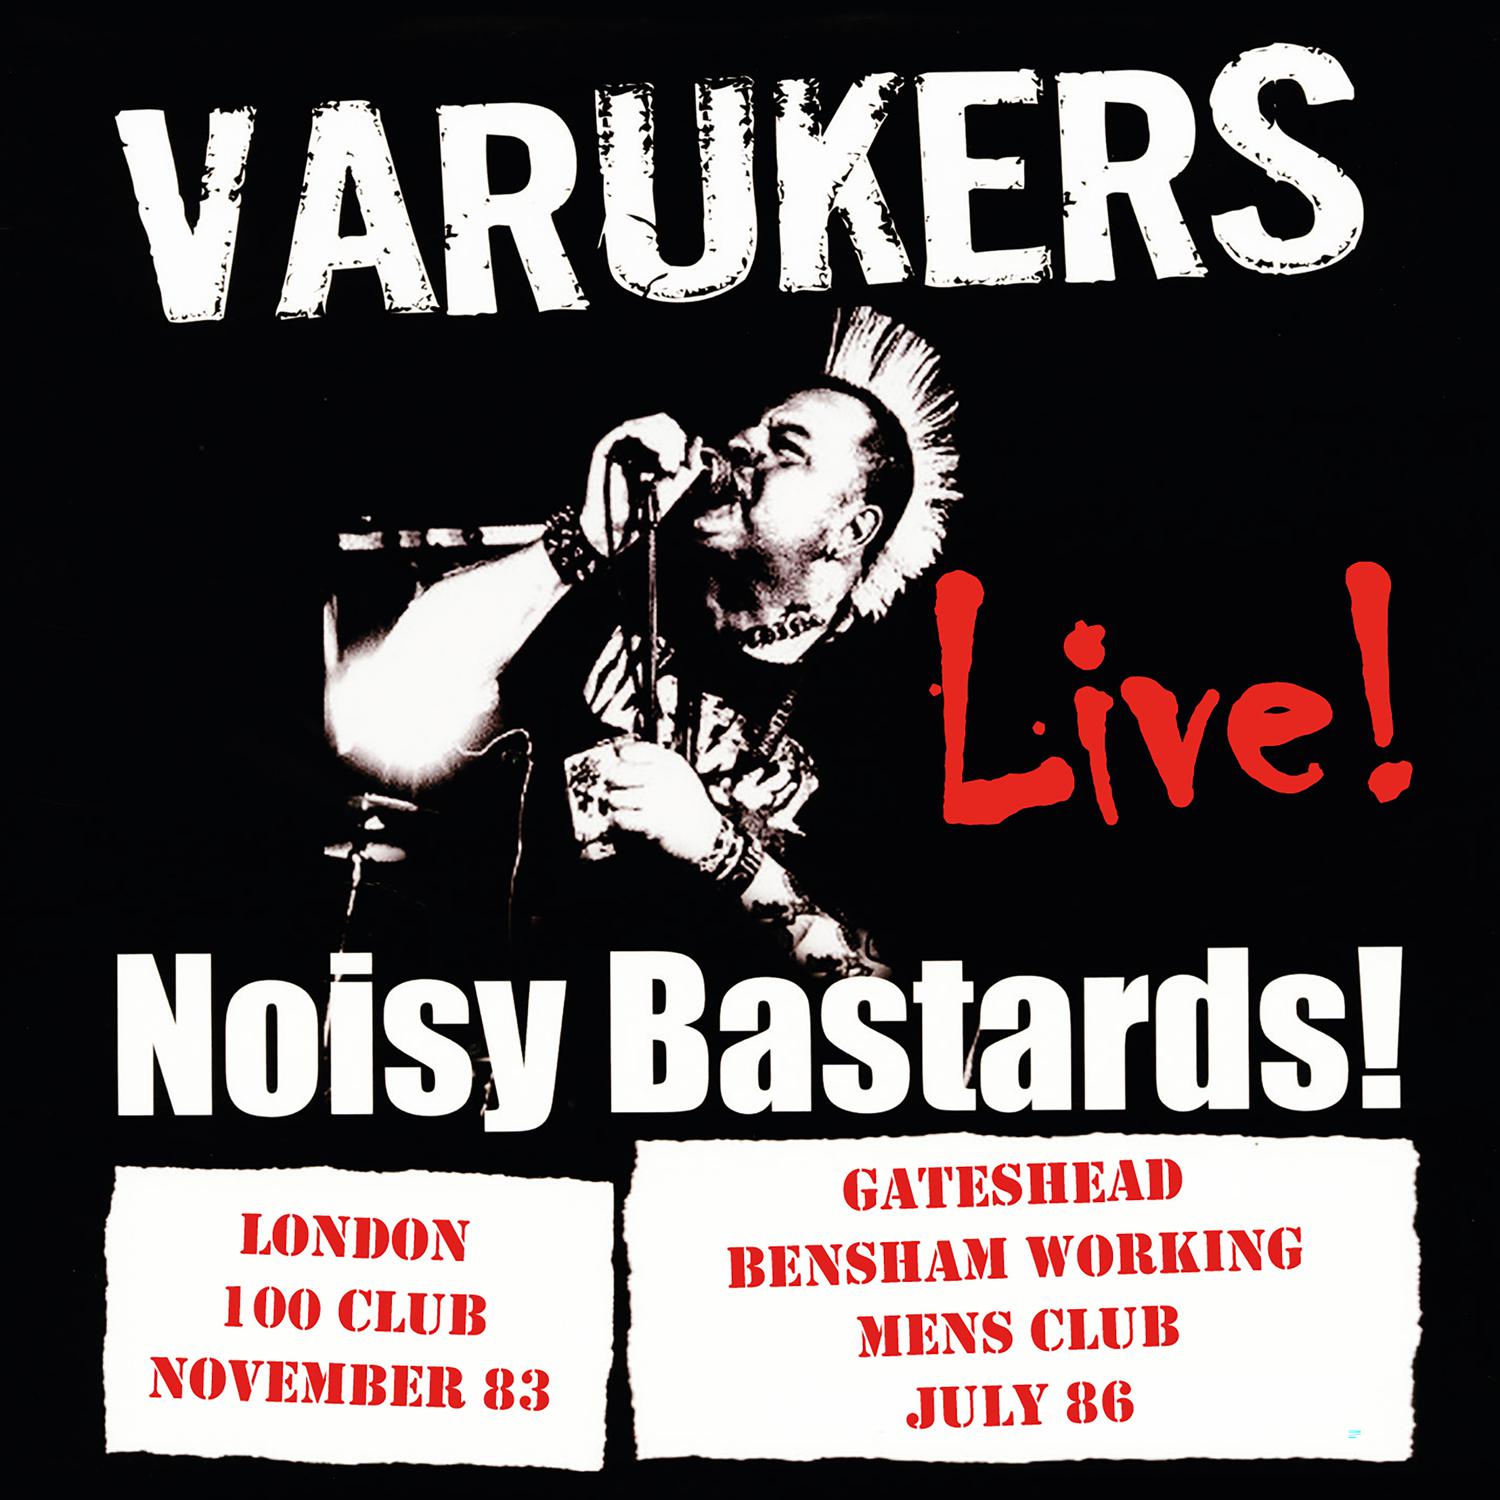 The Varukers - Who Pays? (Live - Gateshead Bensham Working Mens Club)